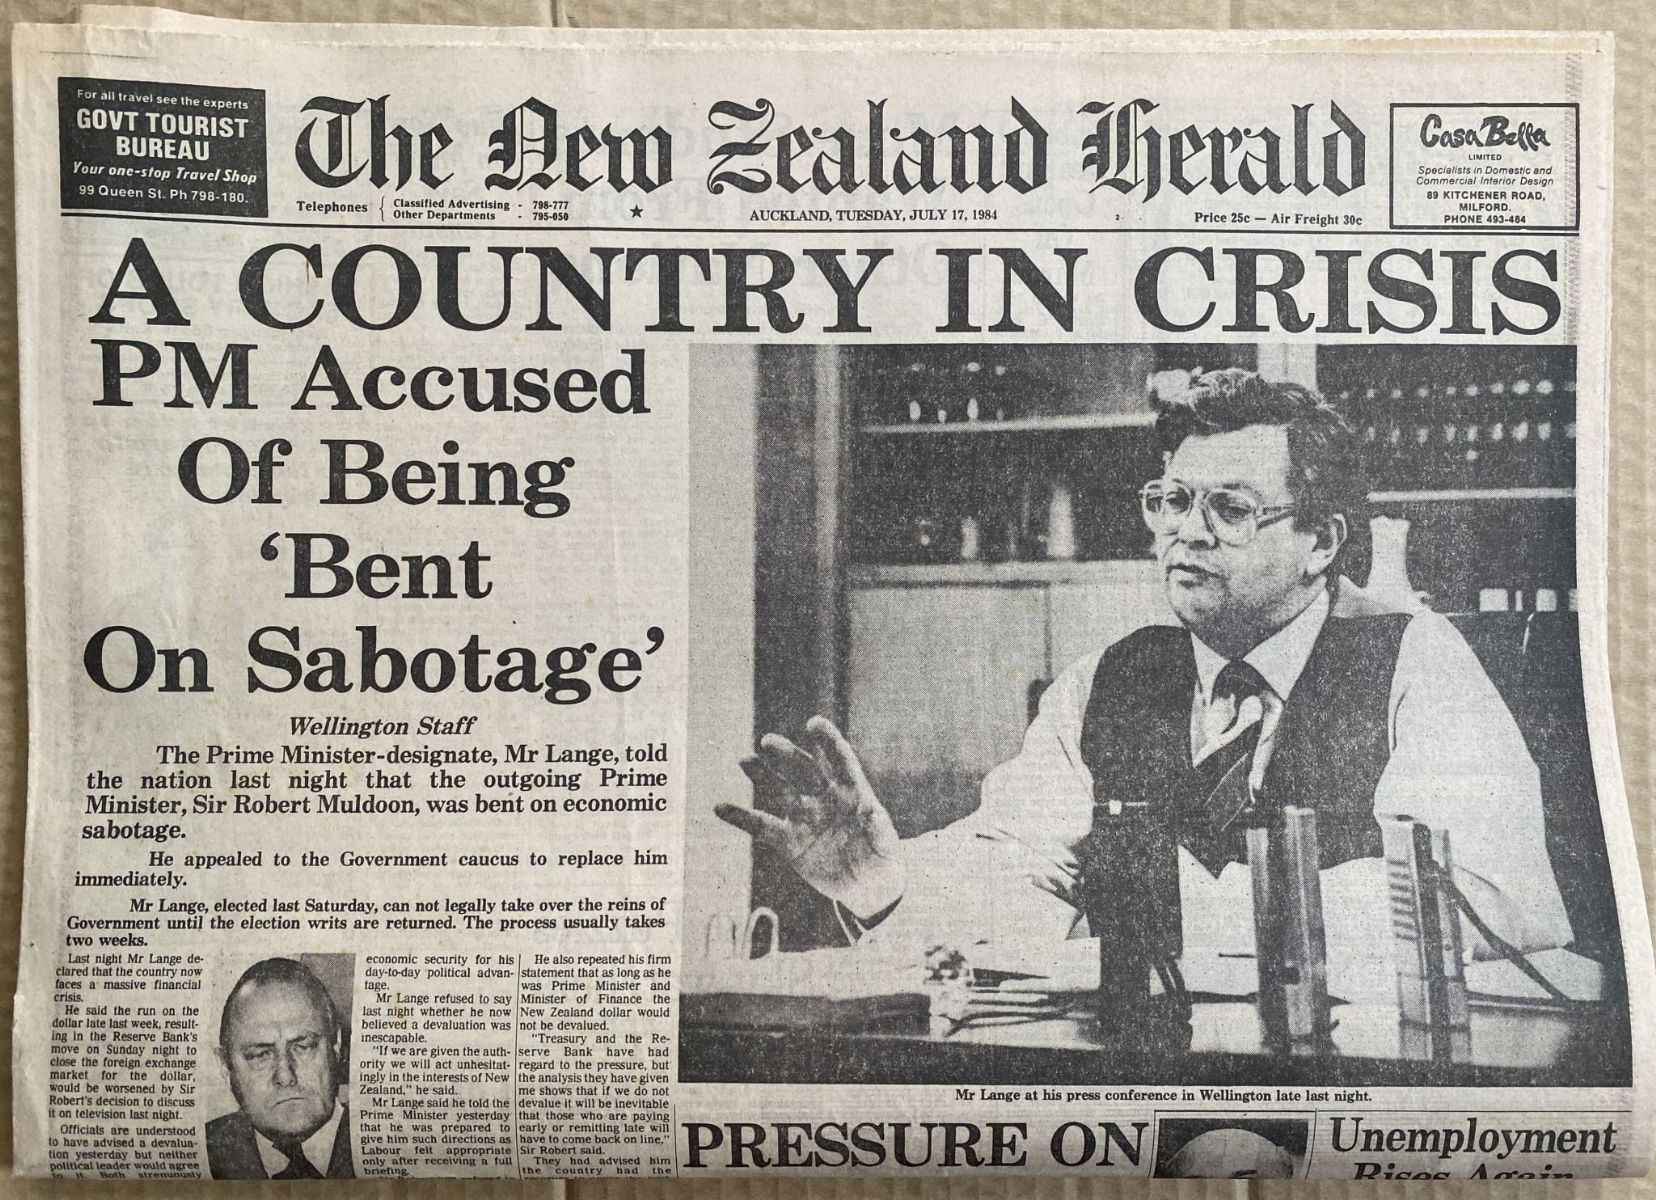 OLD NEWSPAPER: The New Zealand Herald, 17 June 1984 - NZ in crisis